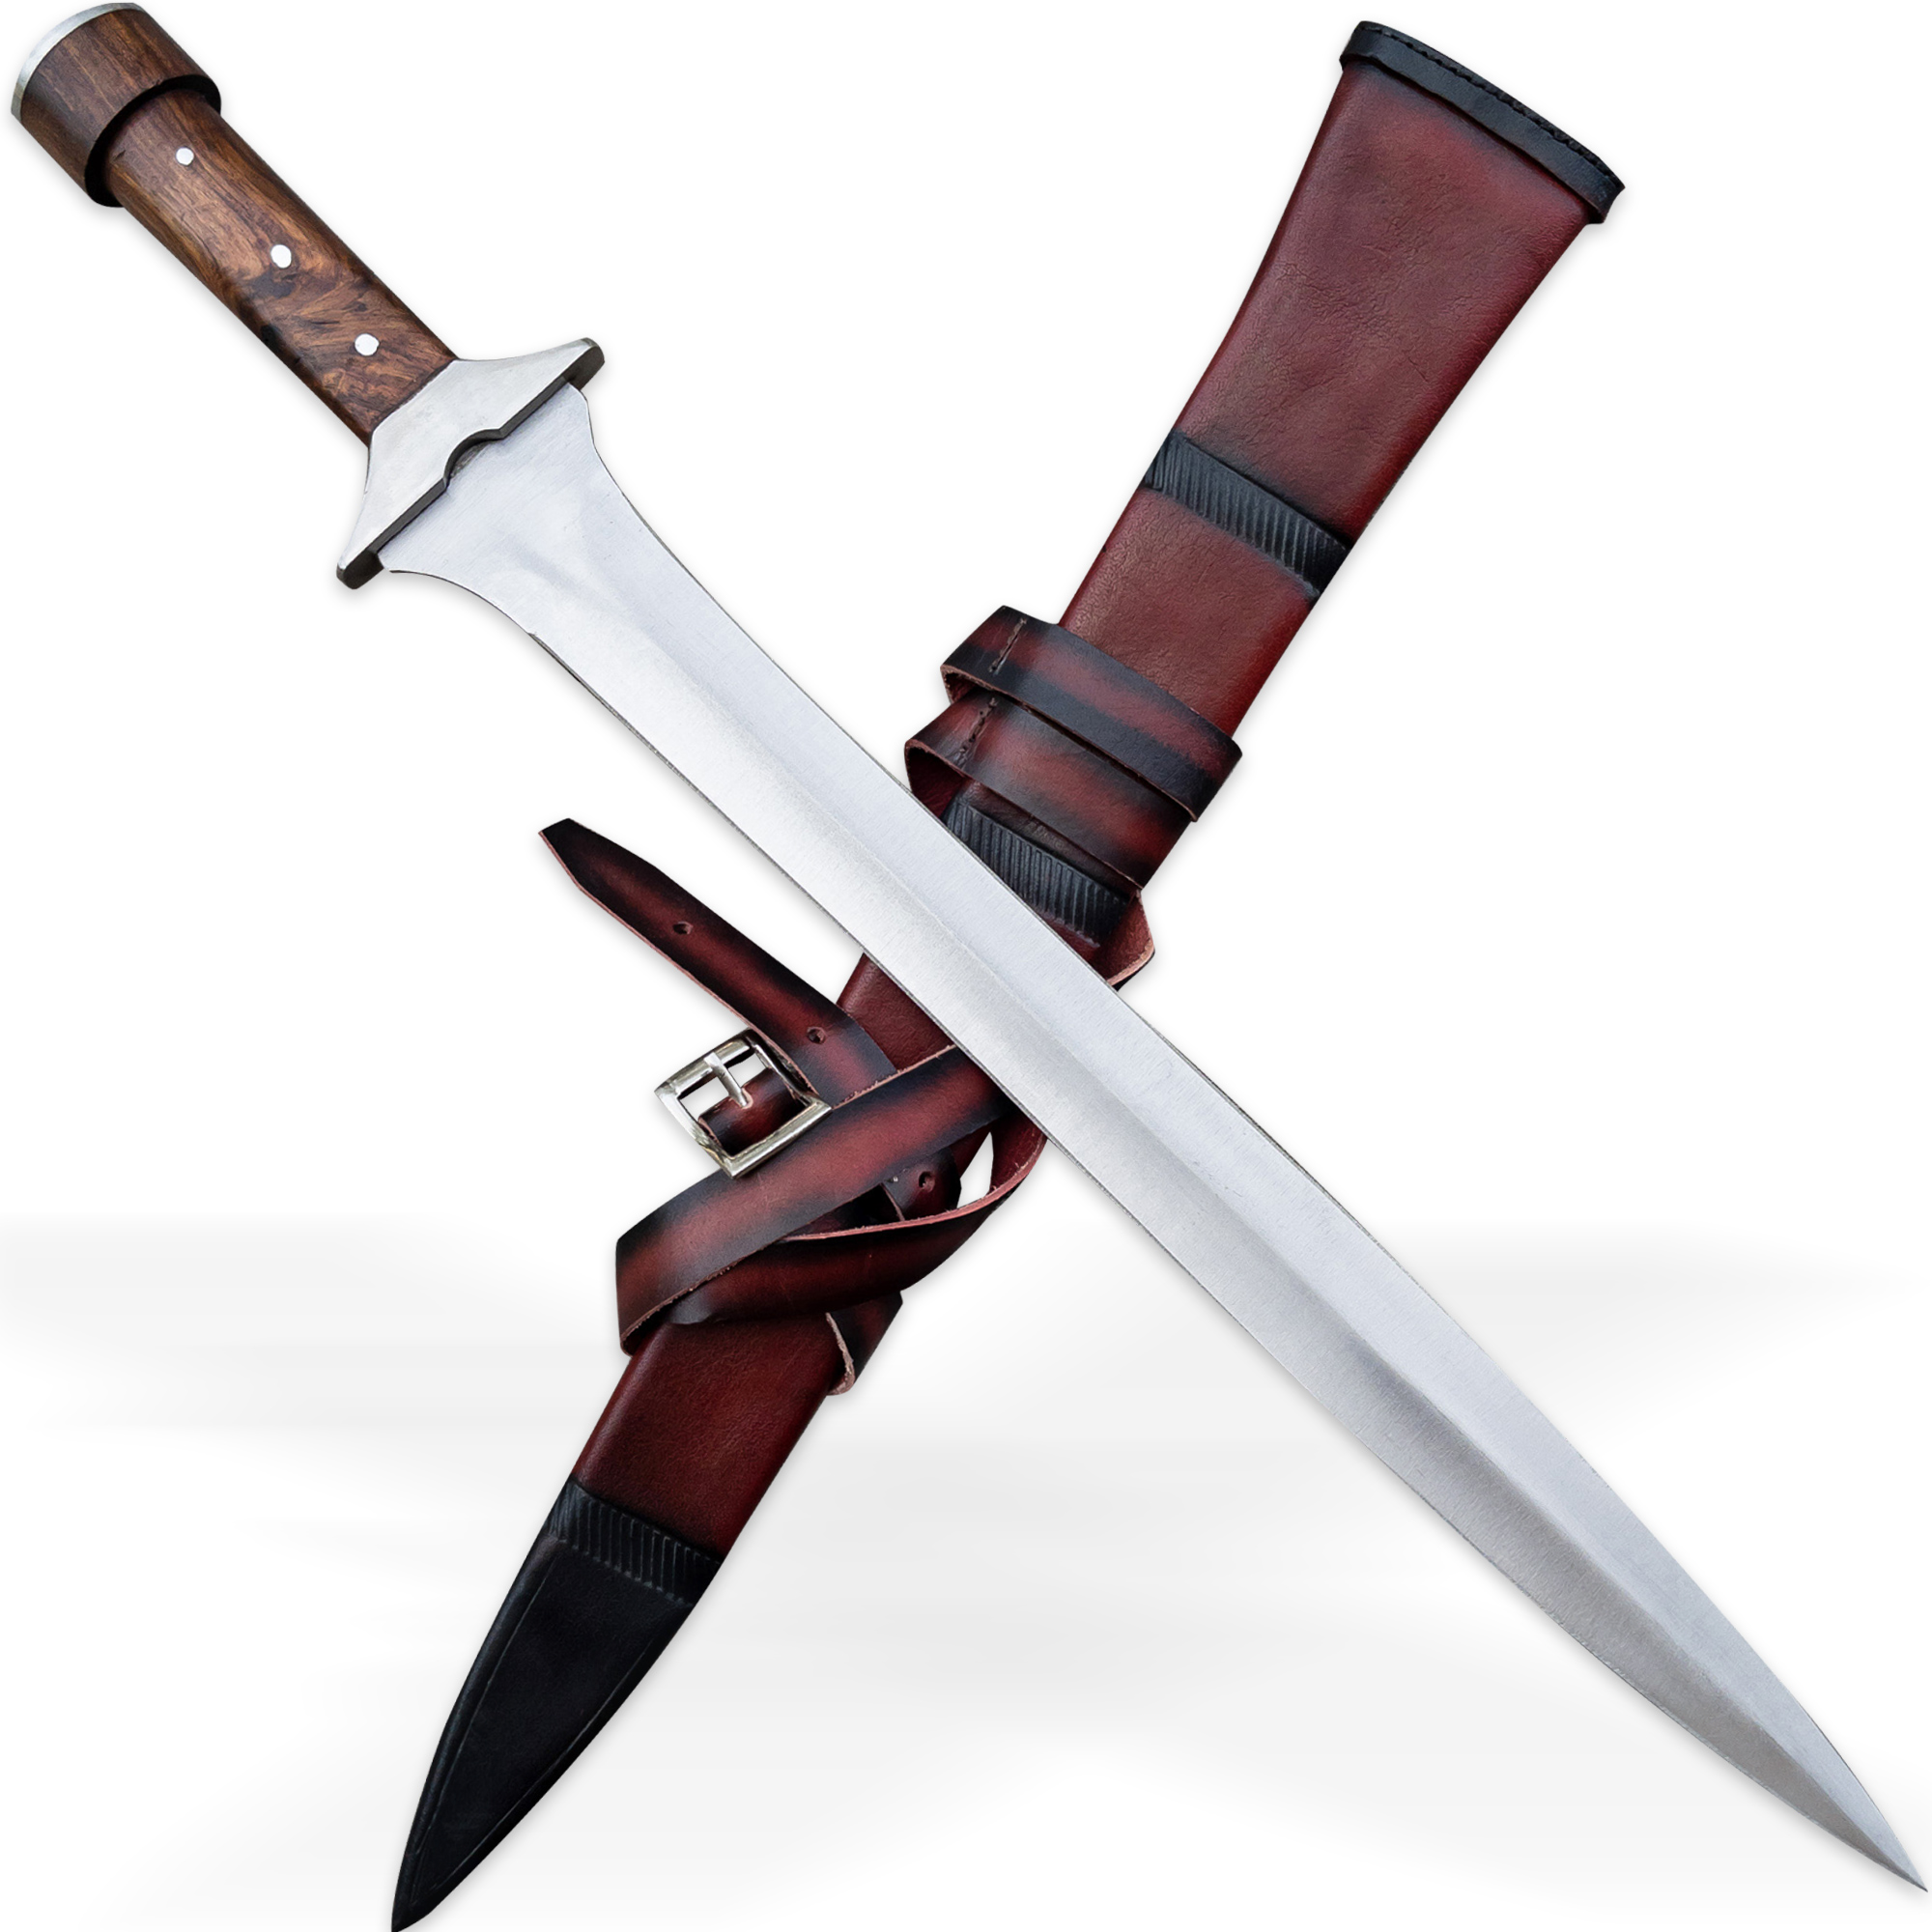 Conceptualized Ache Full Tang Battle Ready Roman Xiphos SWORD